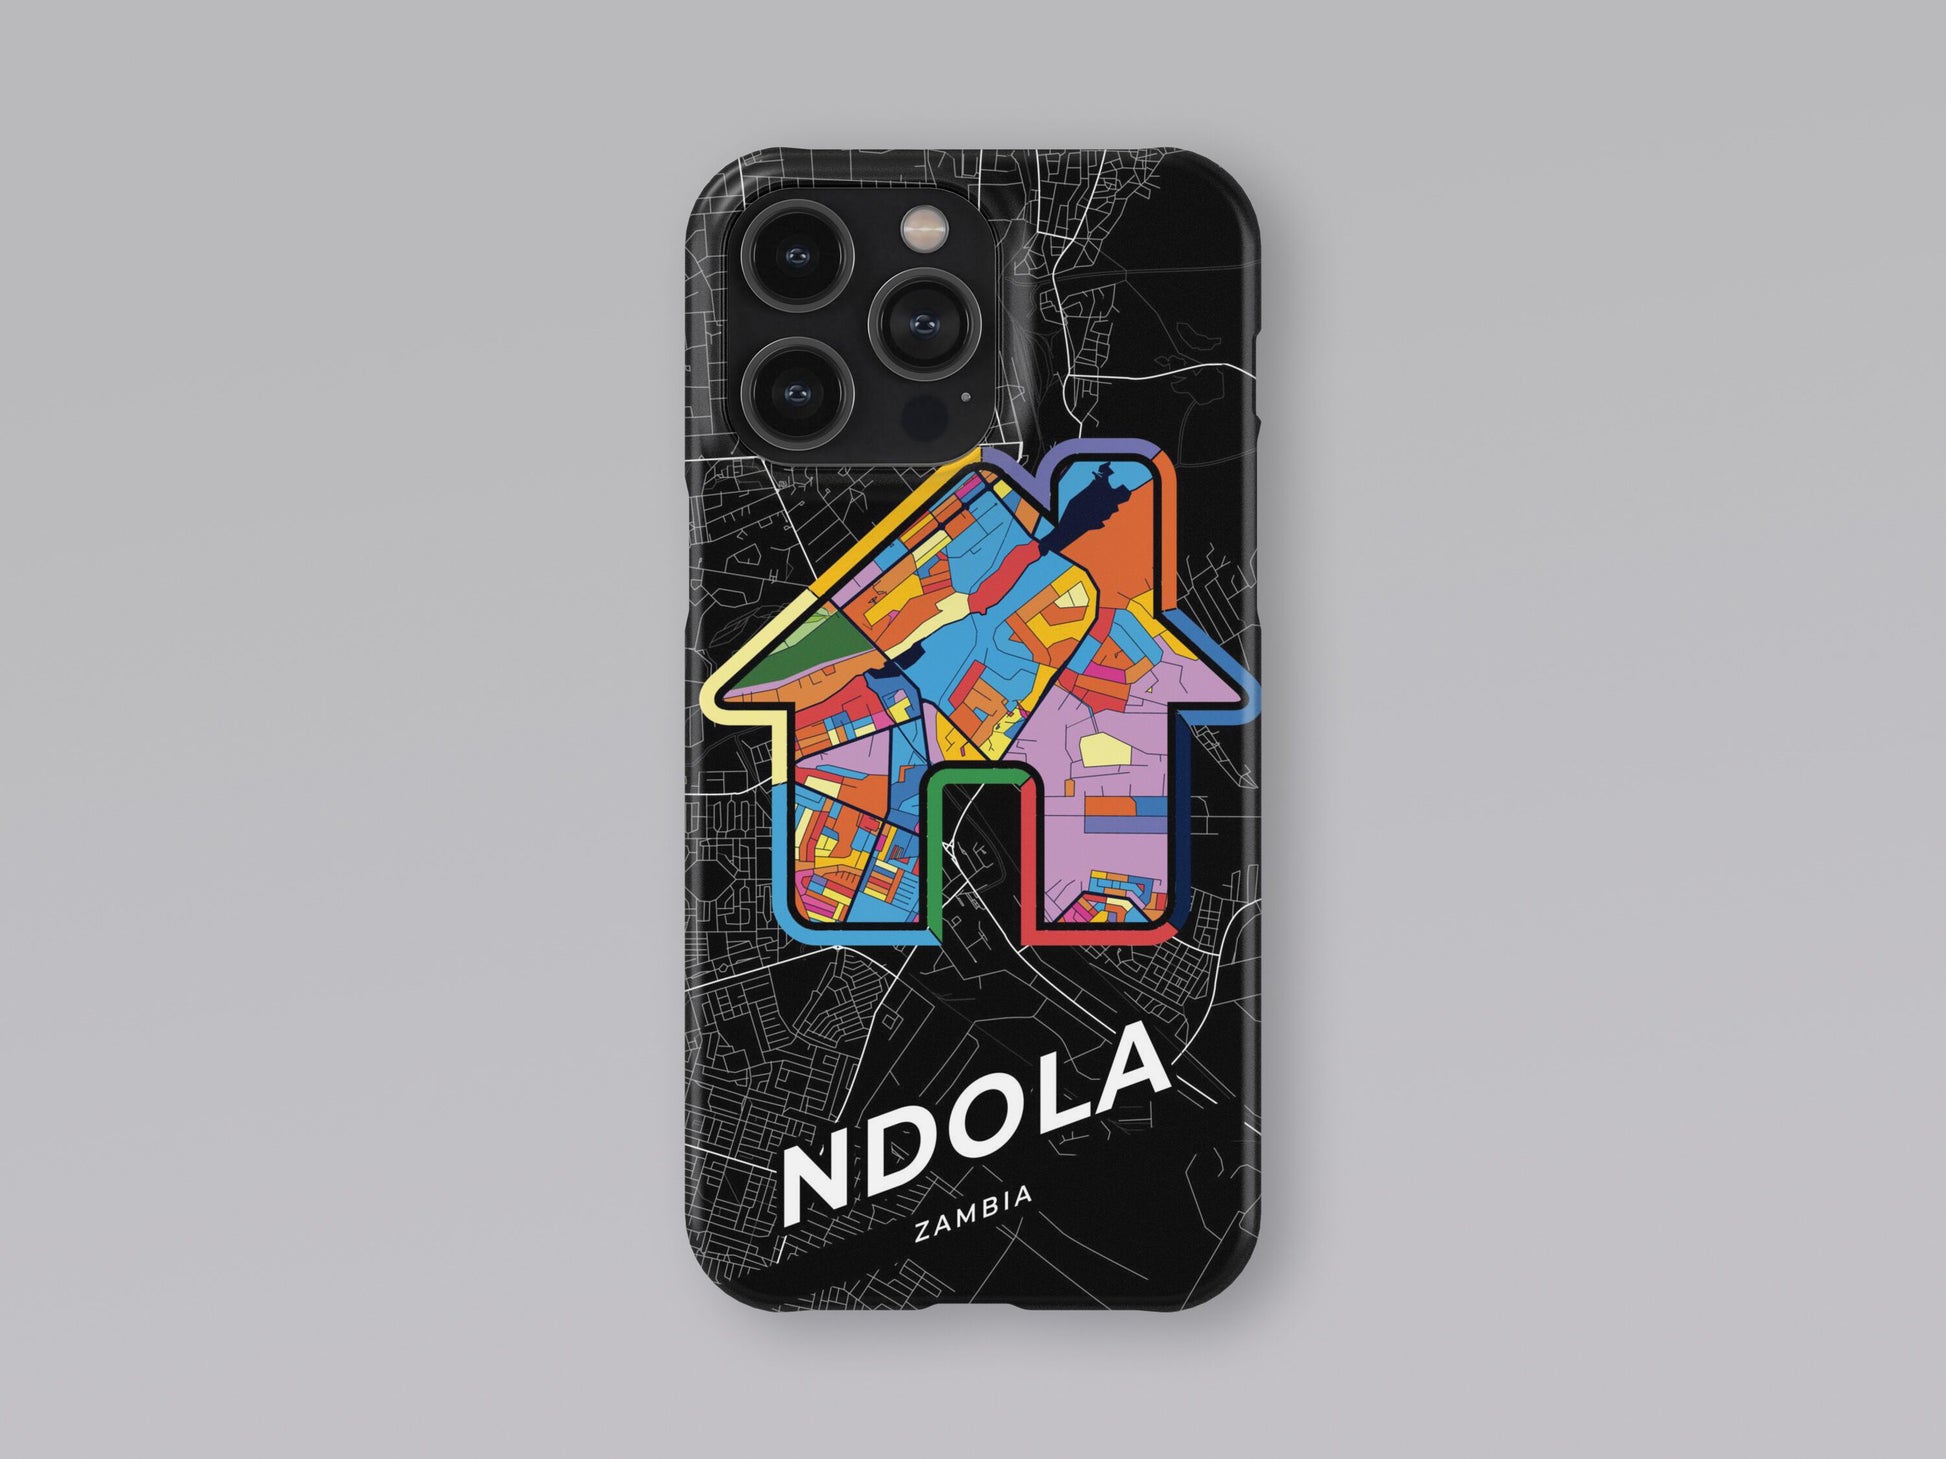 Ndola Zambia slim phone case with colorful icon 3